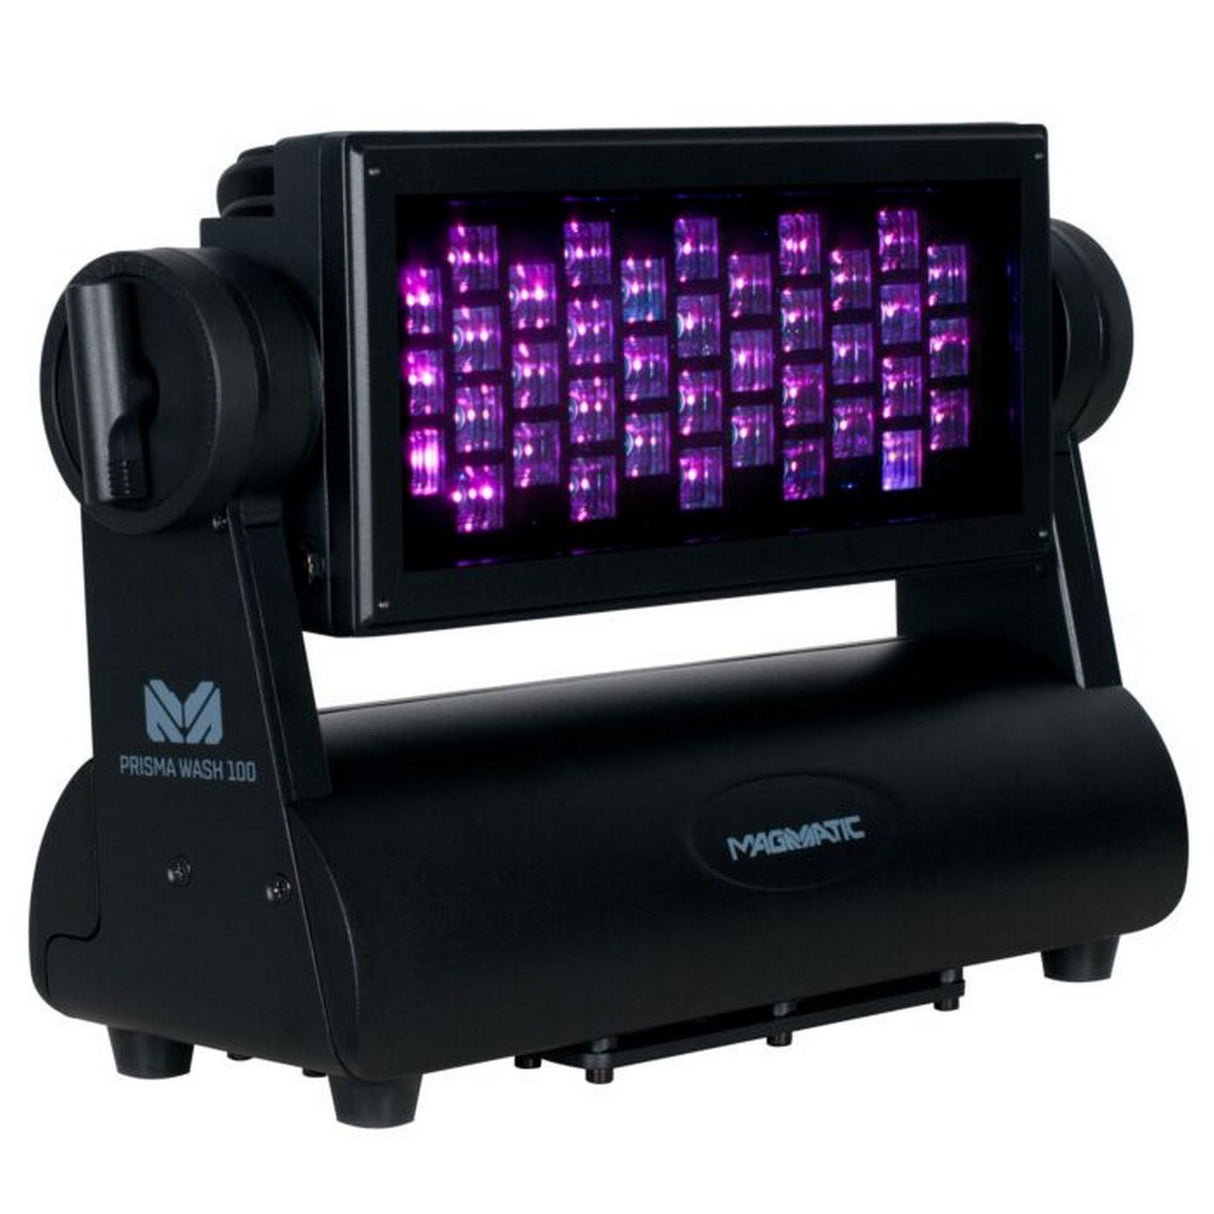 Elation Prisma Wash 100 IP65 Exterior High-Power UV Wash Luminaire